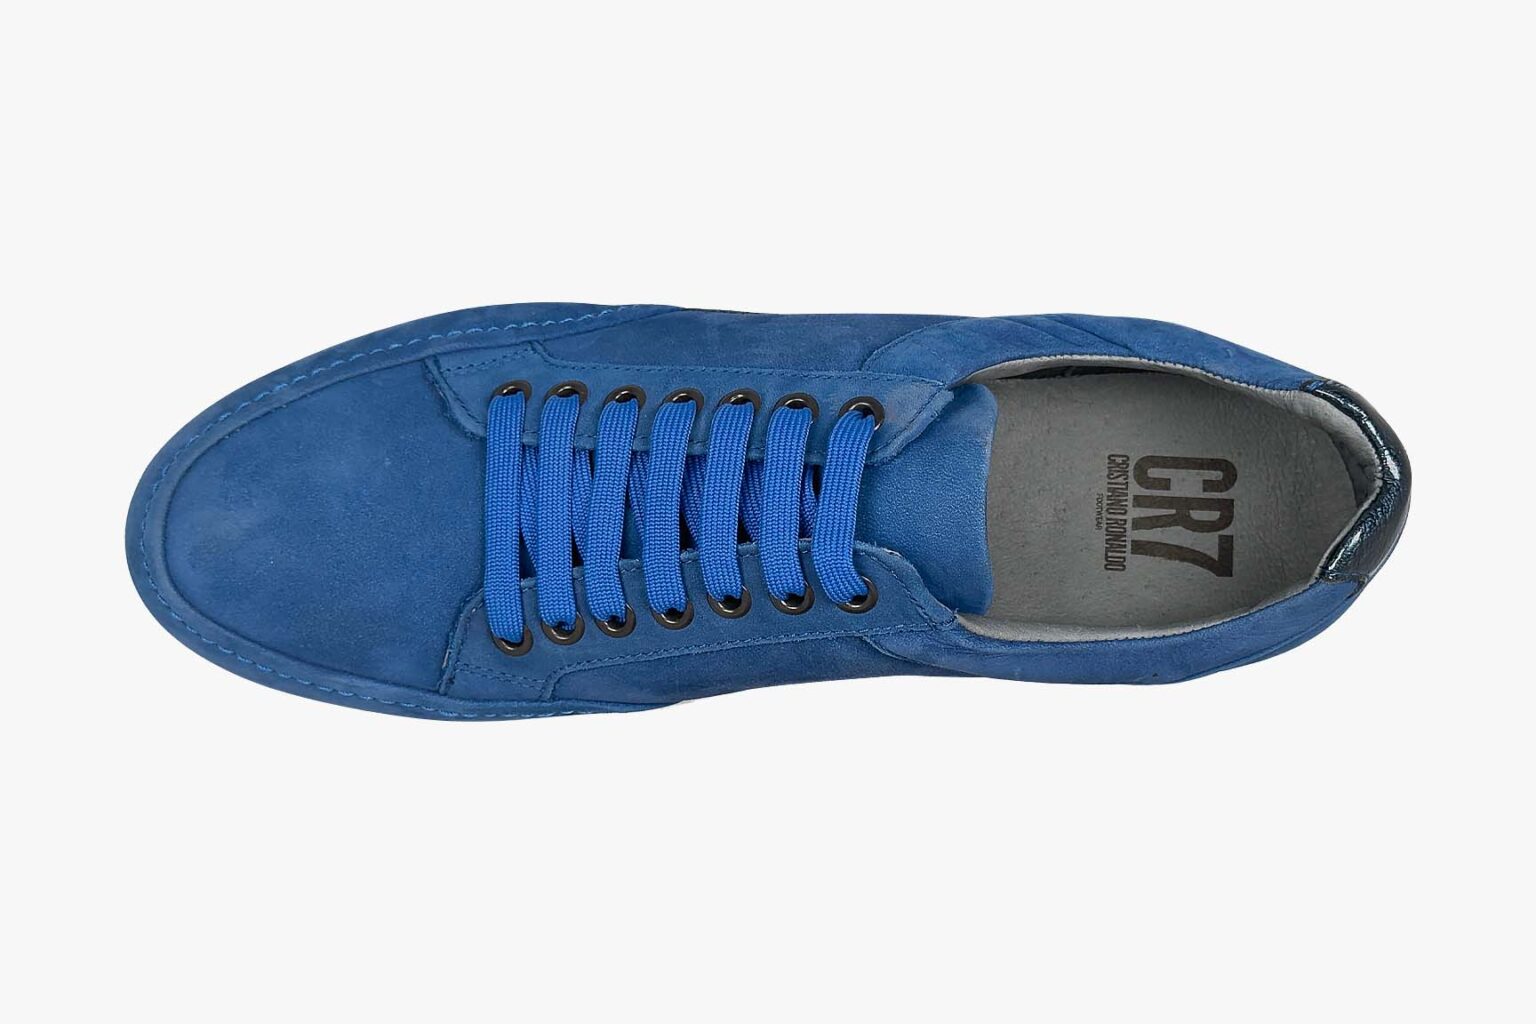 Christiano Ranaldo CR7 Sneakers Suede Blue top